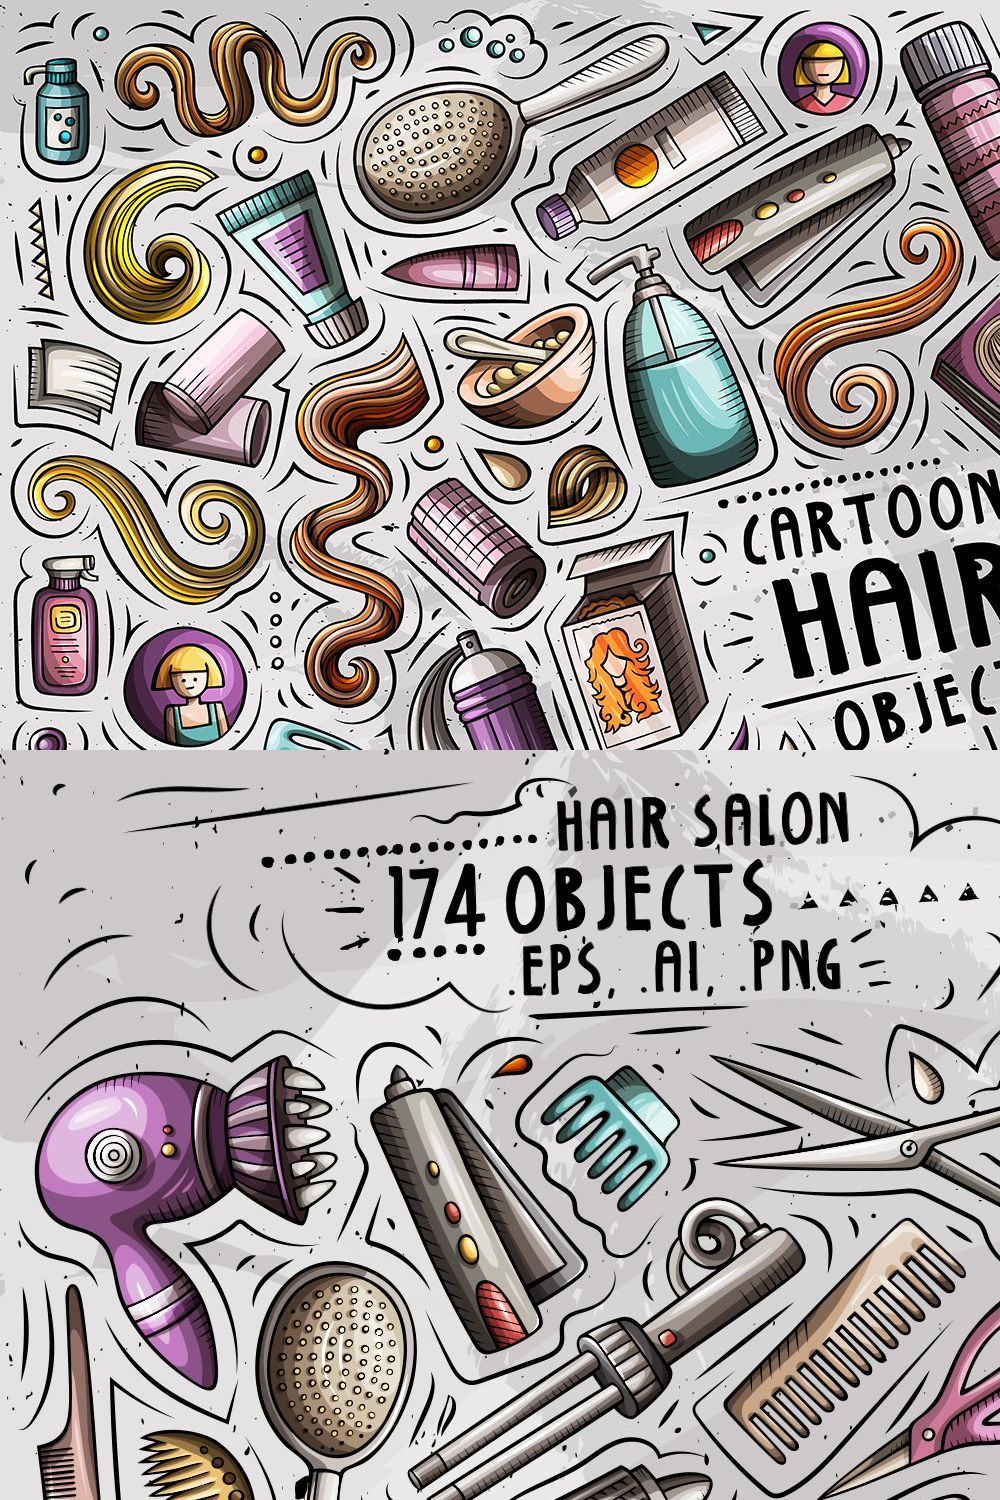 Hair Salon Cartoon Objects Set pinterest preview image.